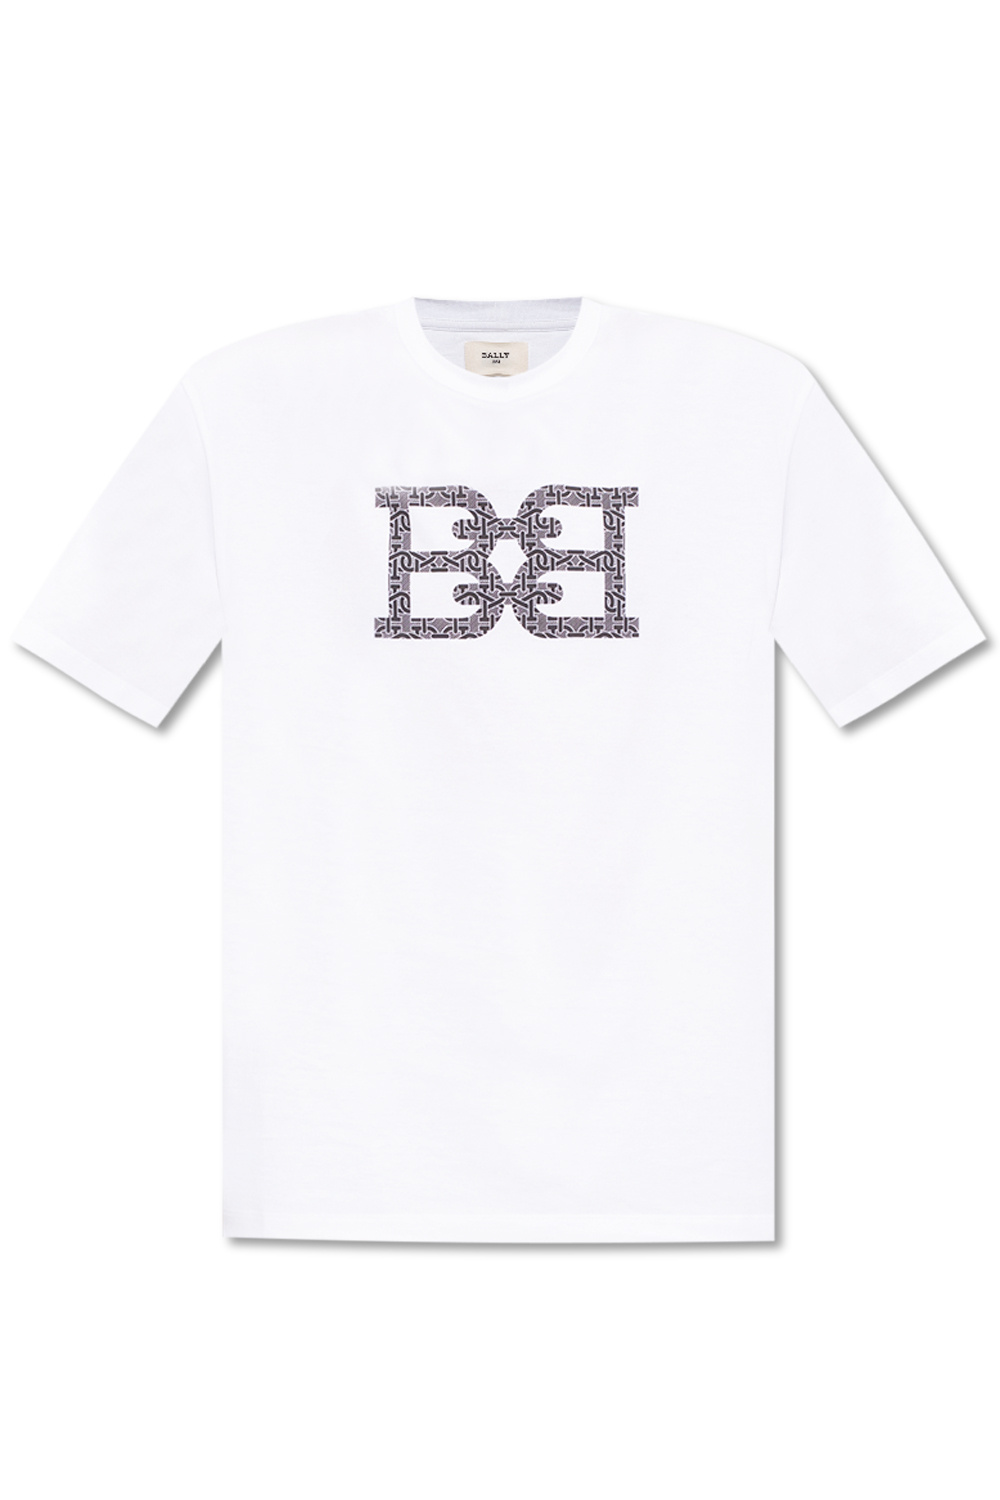 Bally T-shirt denim with logo